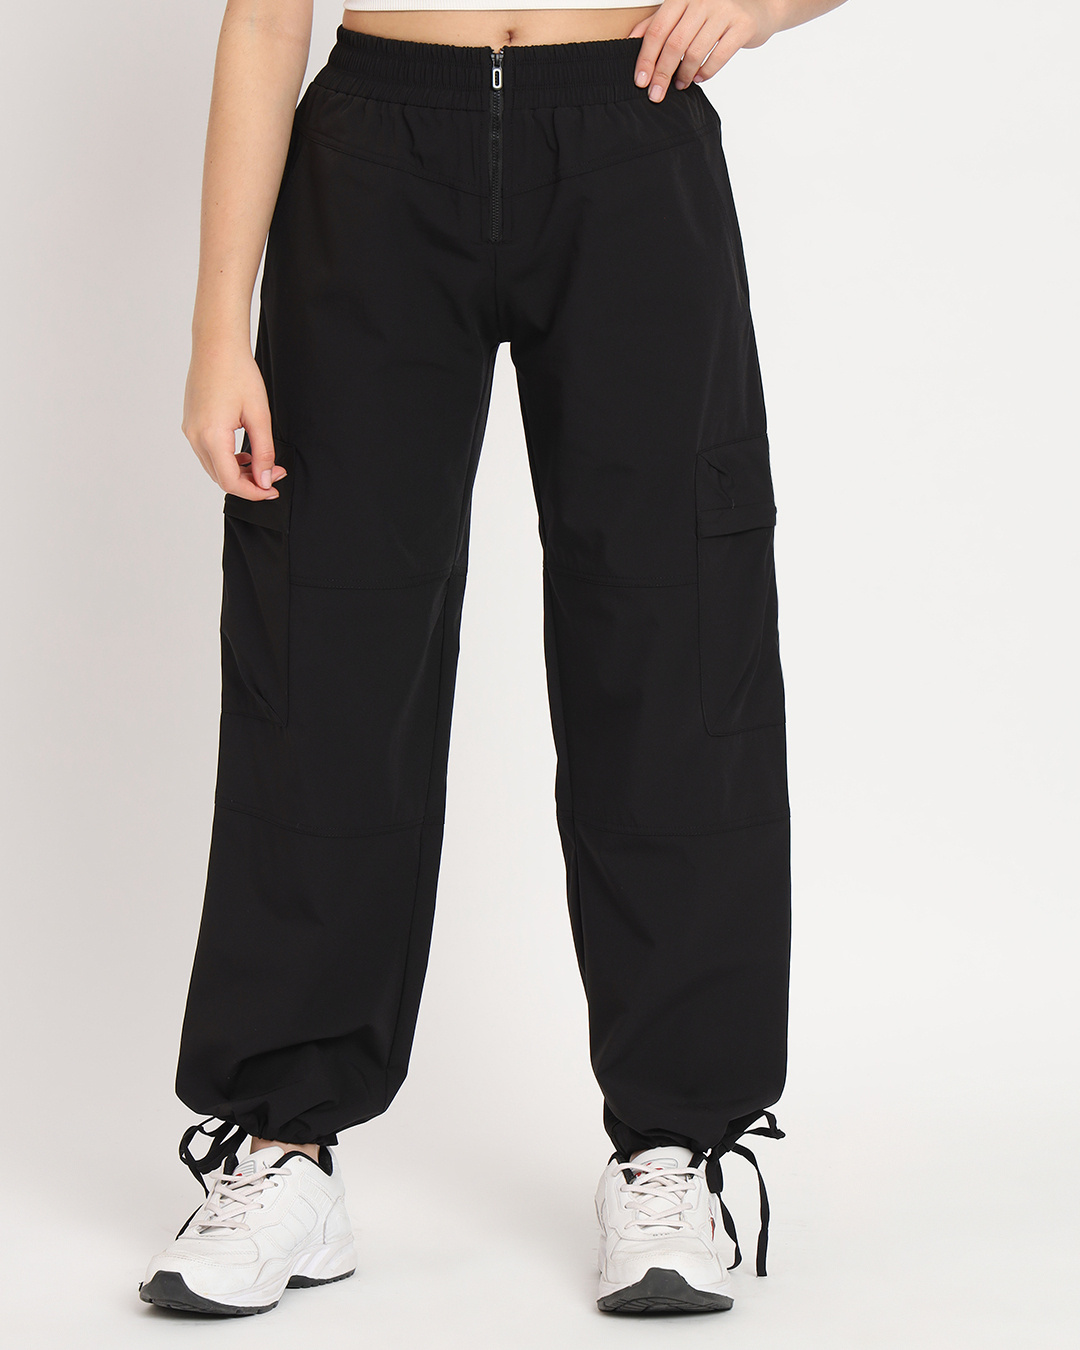 Buy Women's Black Tapered Fit Cargo Parachute Pants Online at Bewakoof